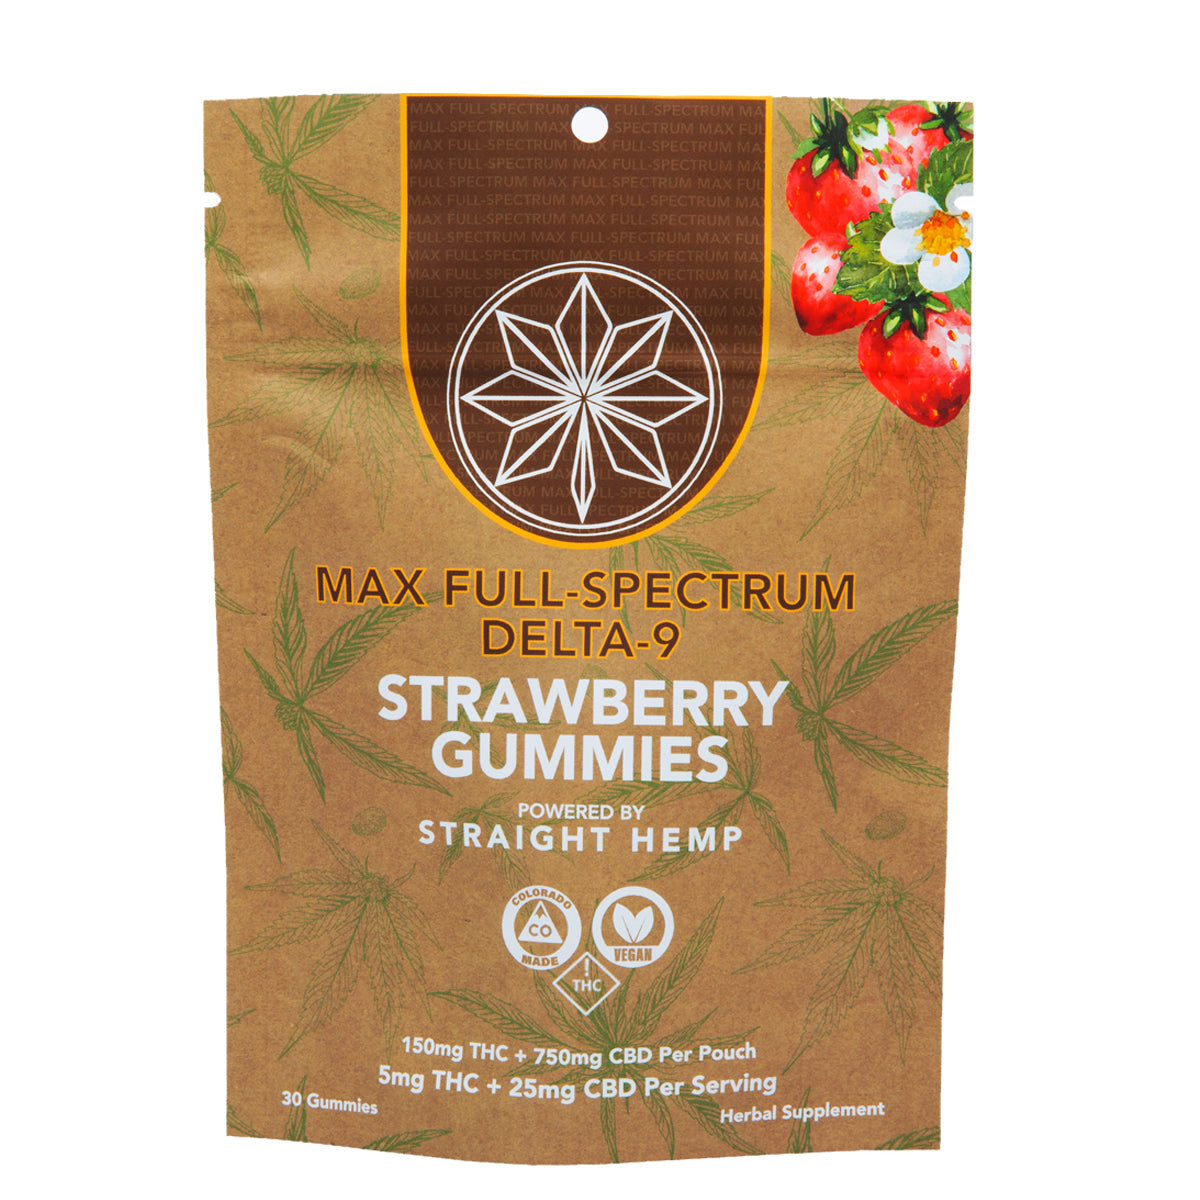 Max Full-Spectrum Delta-9 Strawberry Gummies – Straight Hemp